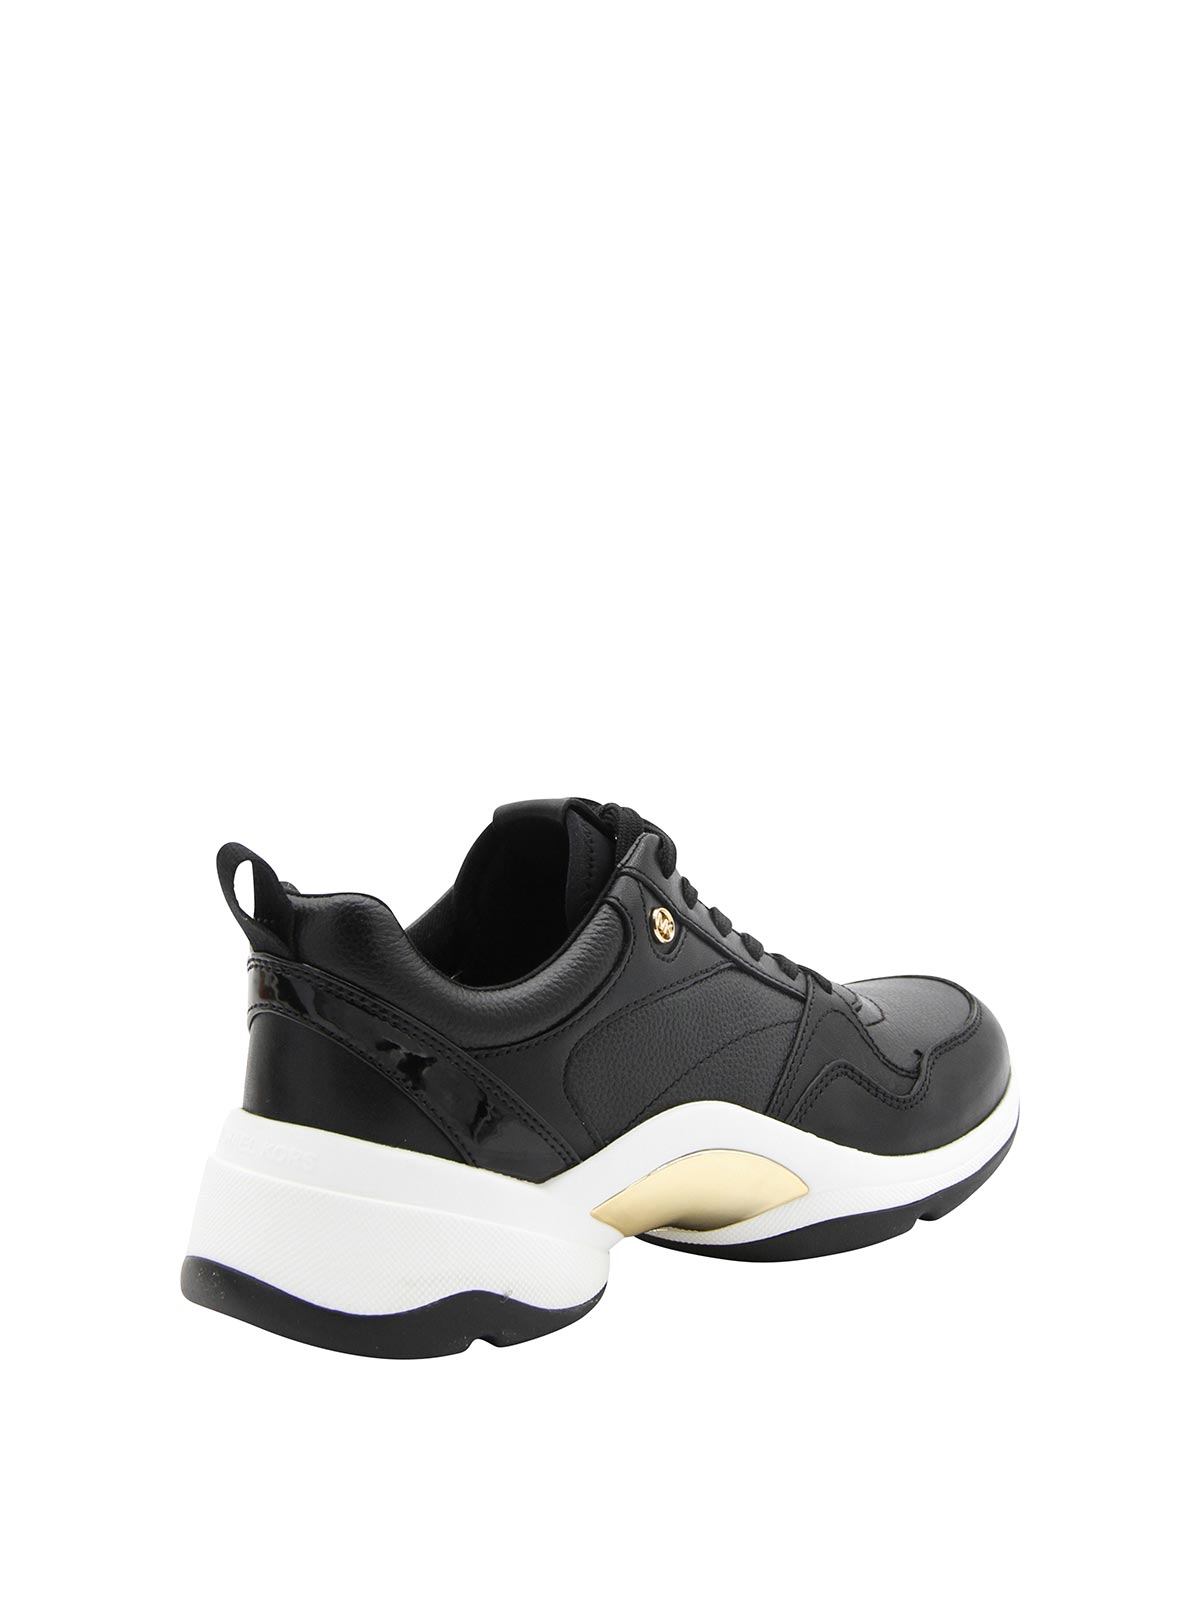 Shop Michael Michael Kors Black Leather Orion Trainer Sneakers